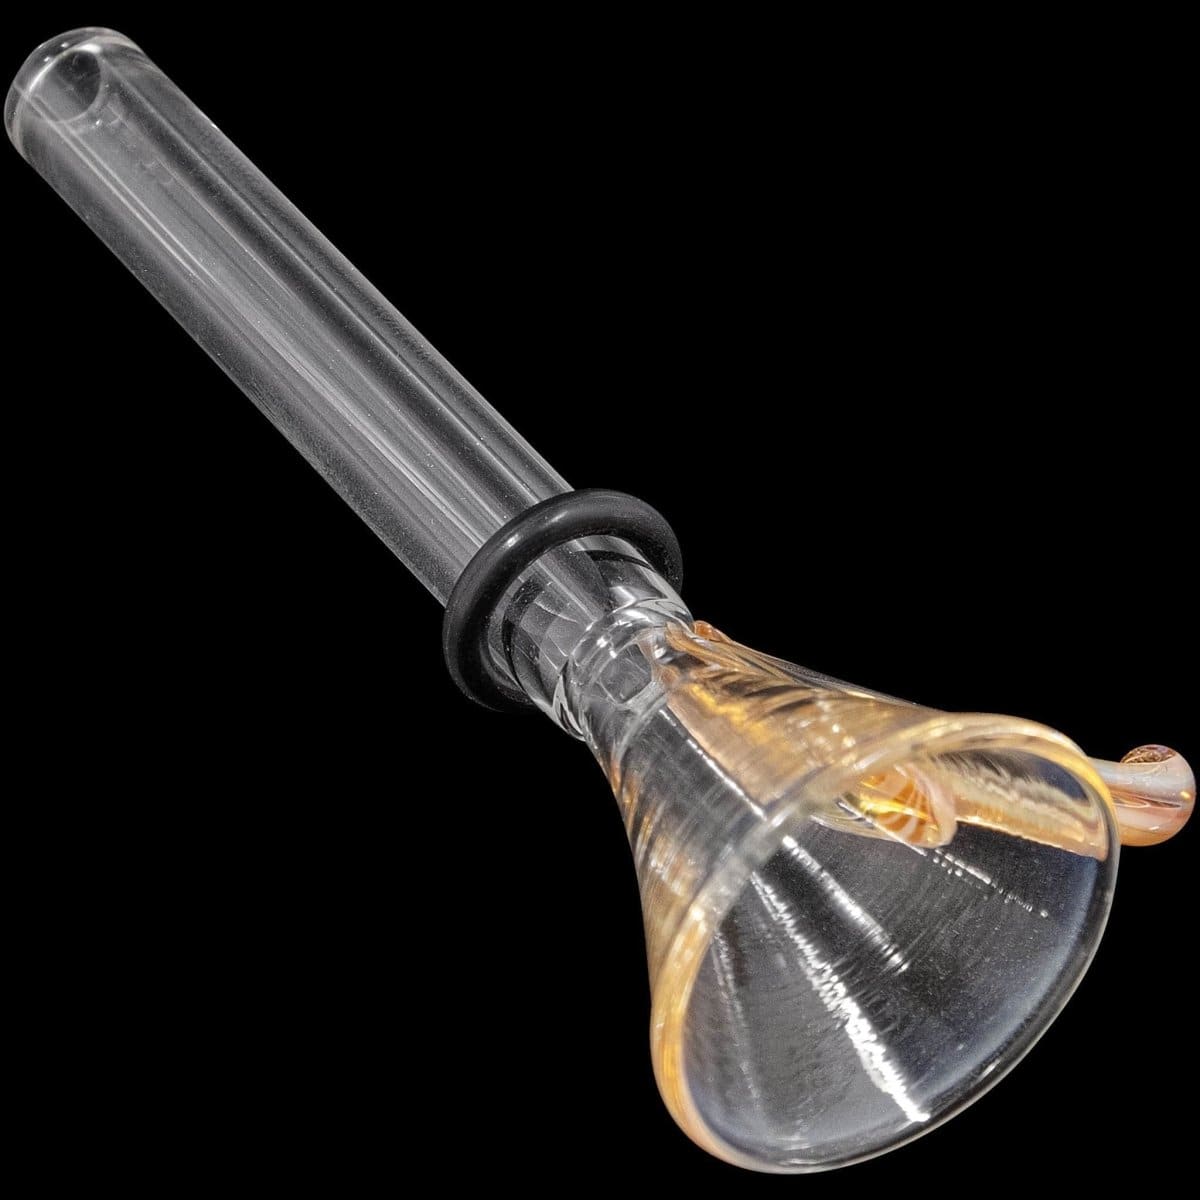 9mm Funnel Slide Bowl with Handle for Pull-Stem Bongs